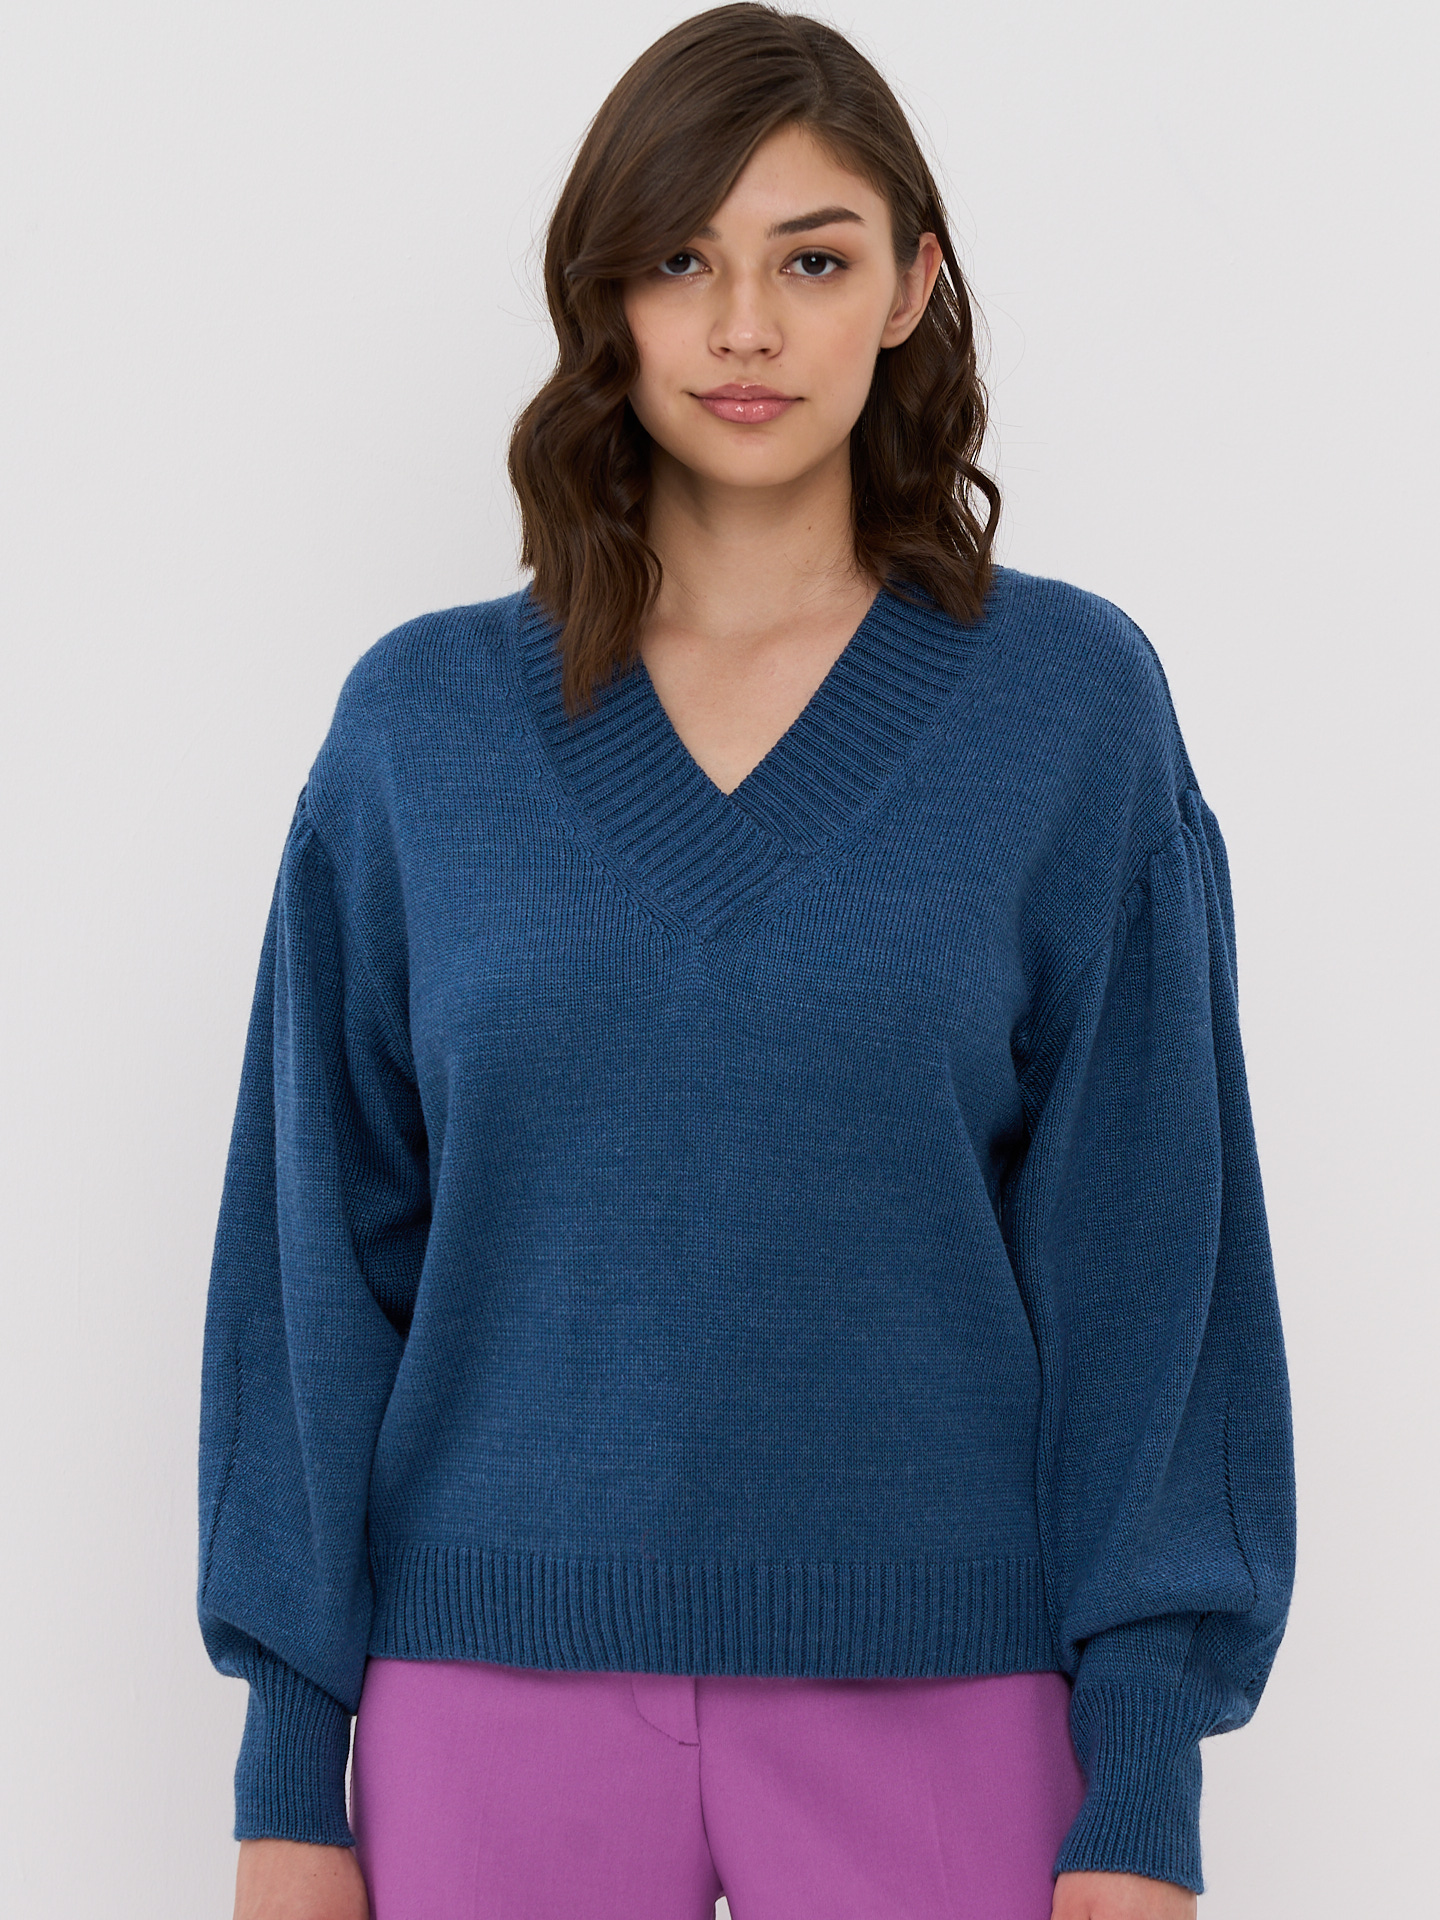 Пуловер женский 5222-41209 синий 50 RU VAY. Цвет: синий